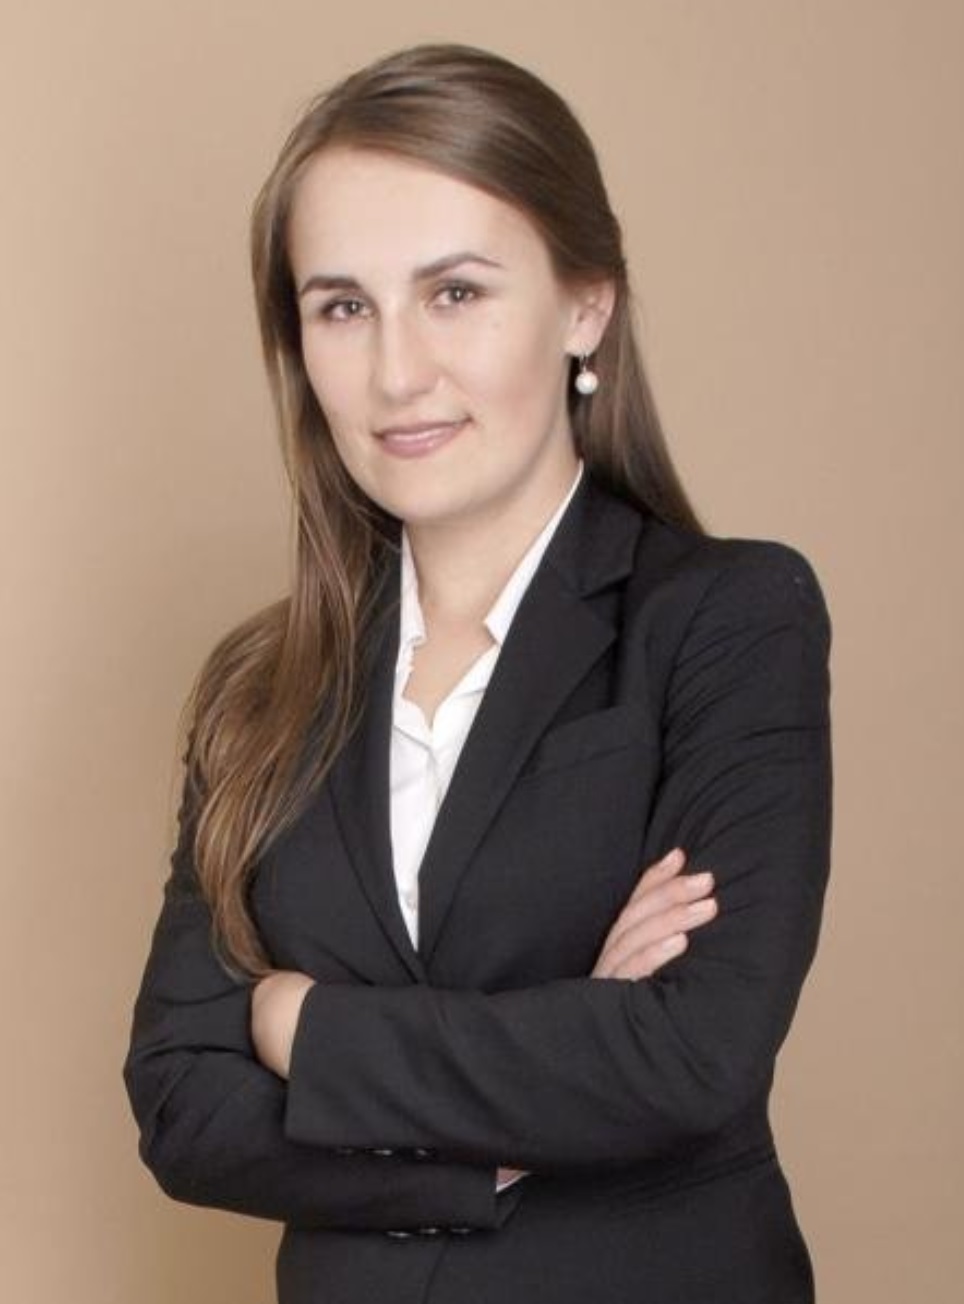 Hostess Daria aus München, GERMANY, Konfektion 36, Studium Recht, Informatik